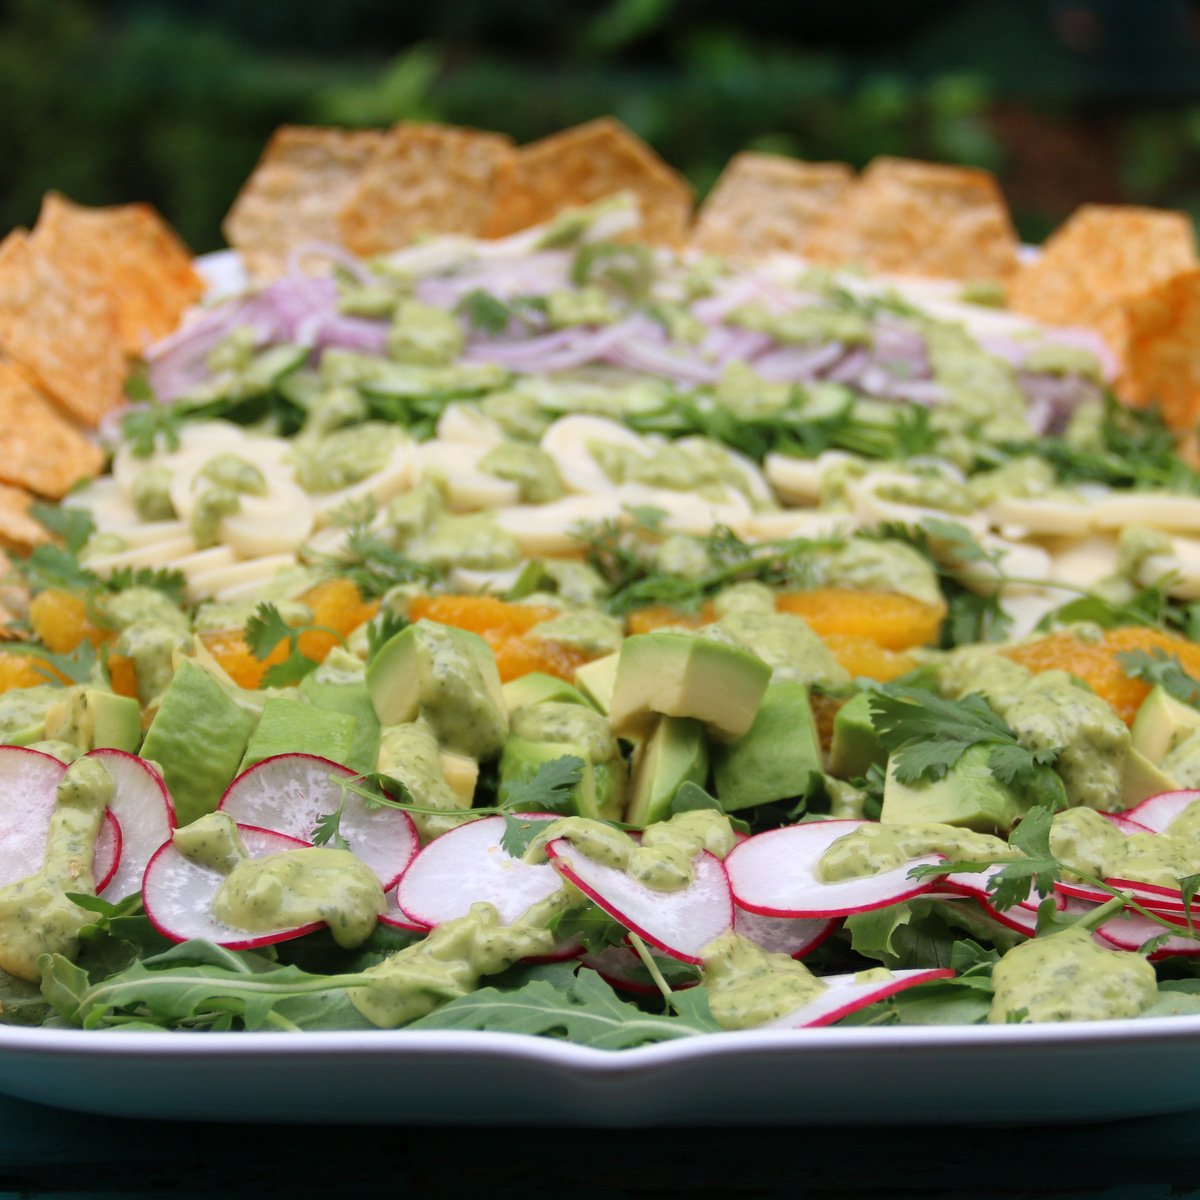 Refreshing salads: Mixed salad with avocado dressing and salmon/avocado Caesar salad